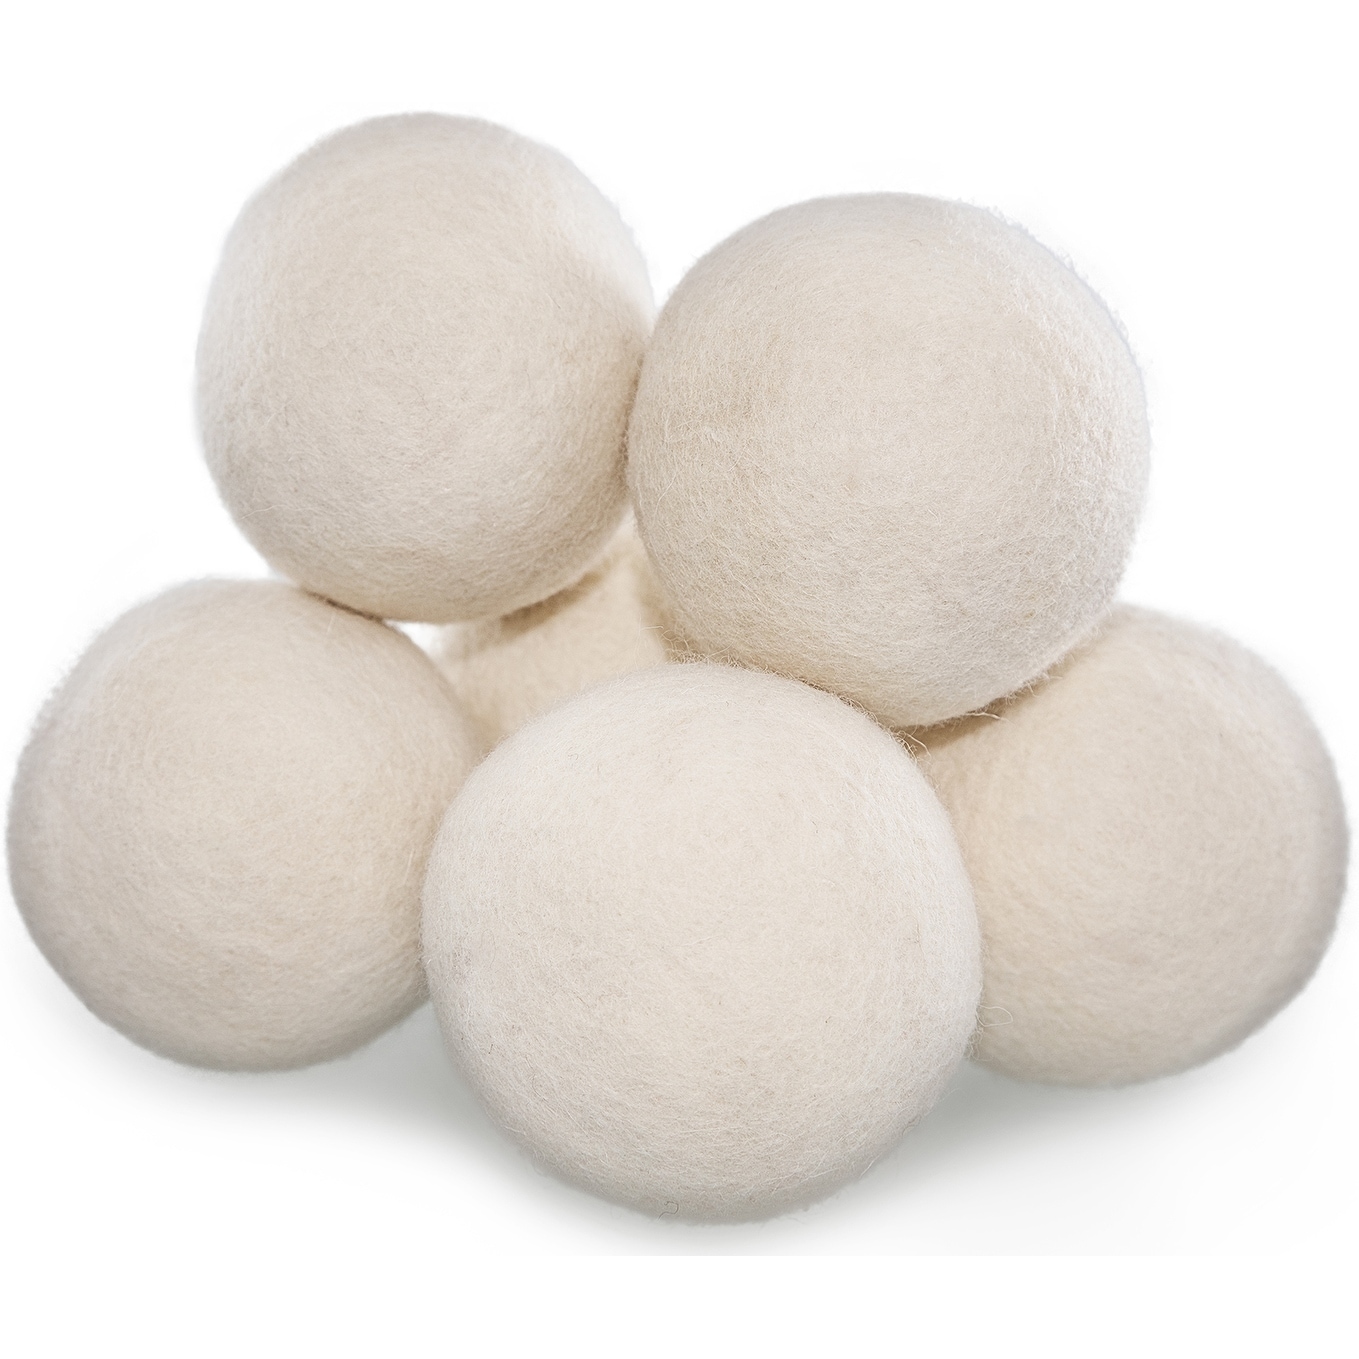 non toxic dryer balls